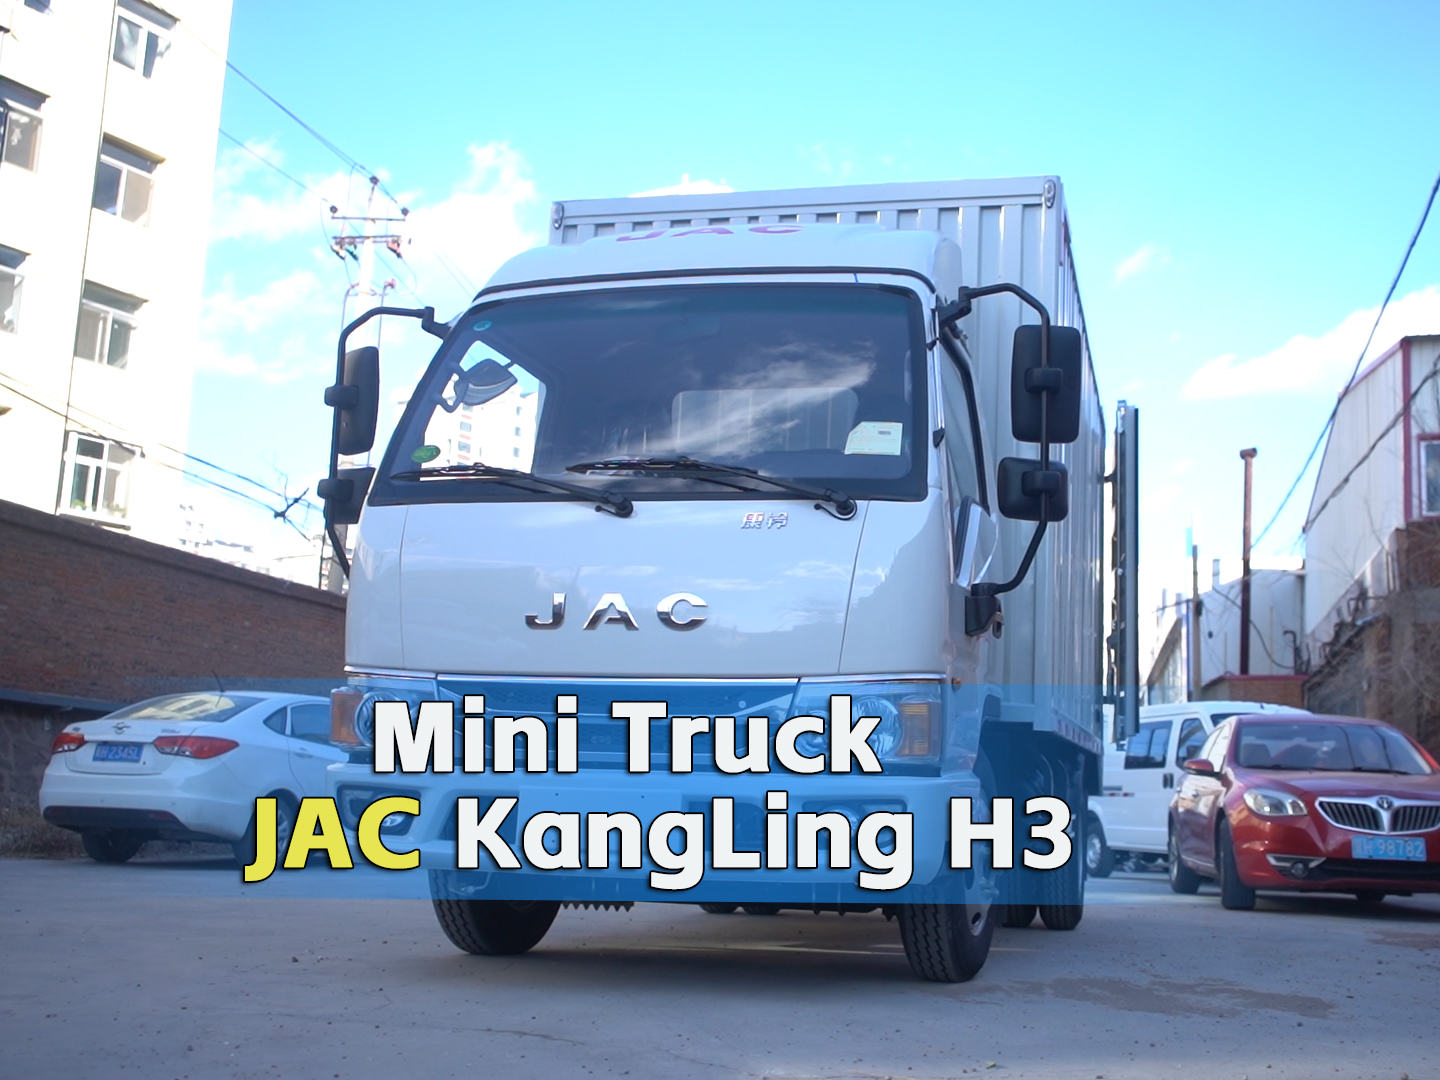 JAC Kangling H3 Mini Truck